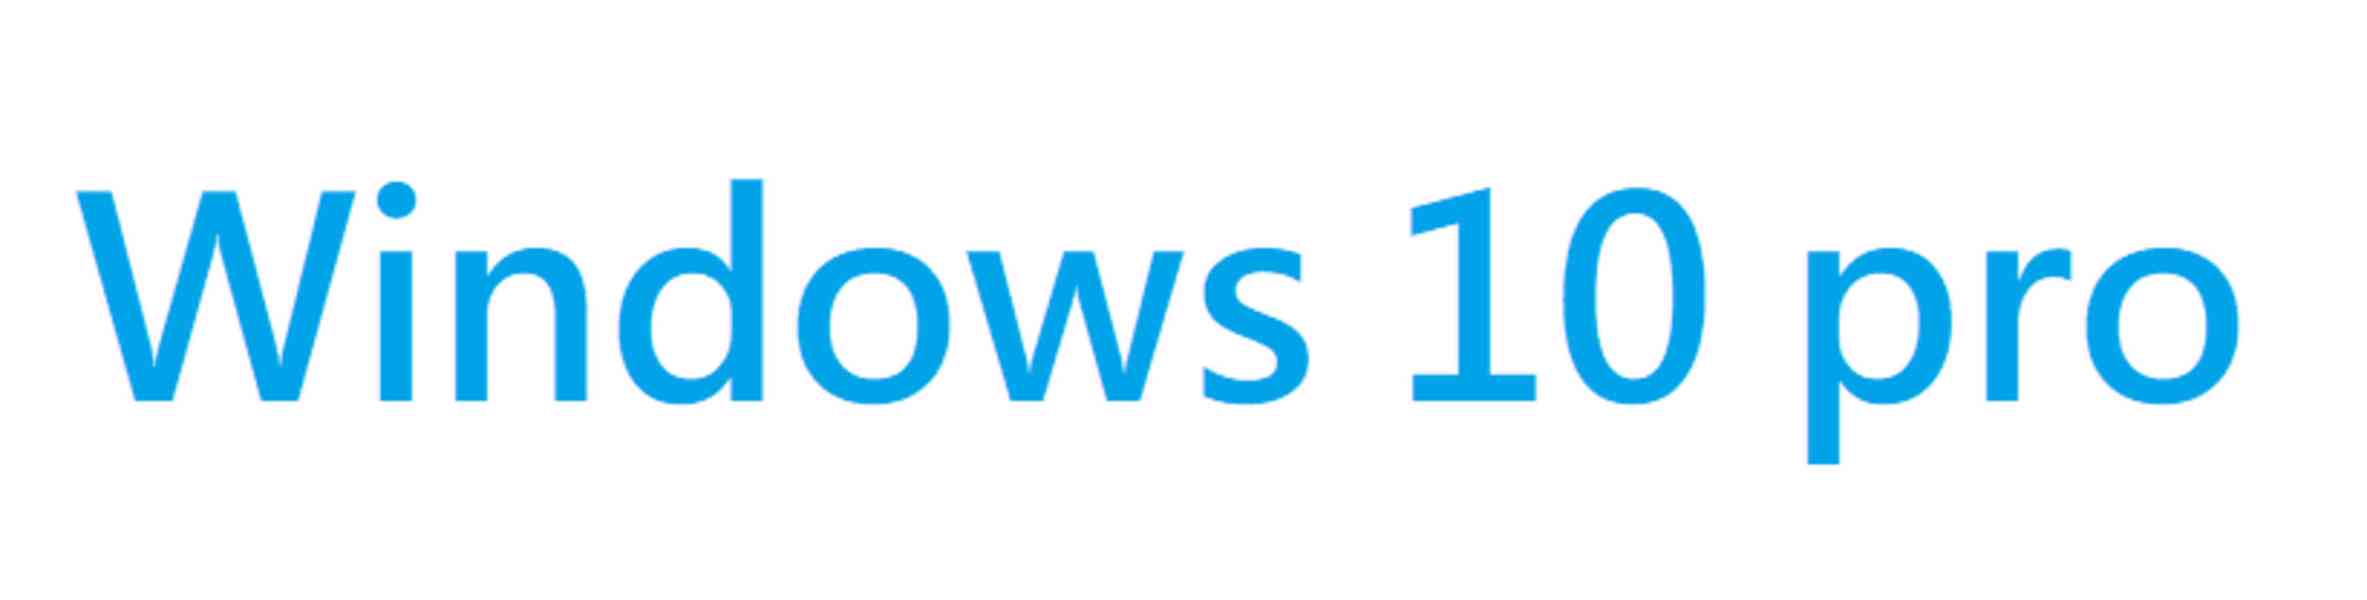 Windows 10 pro licence